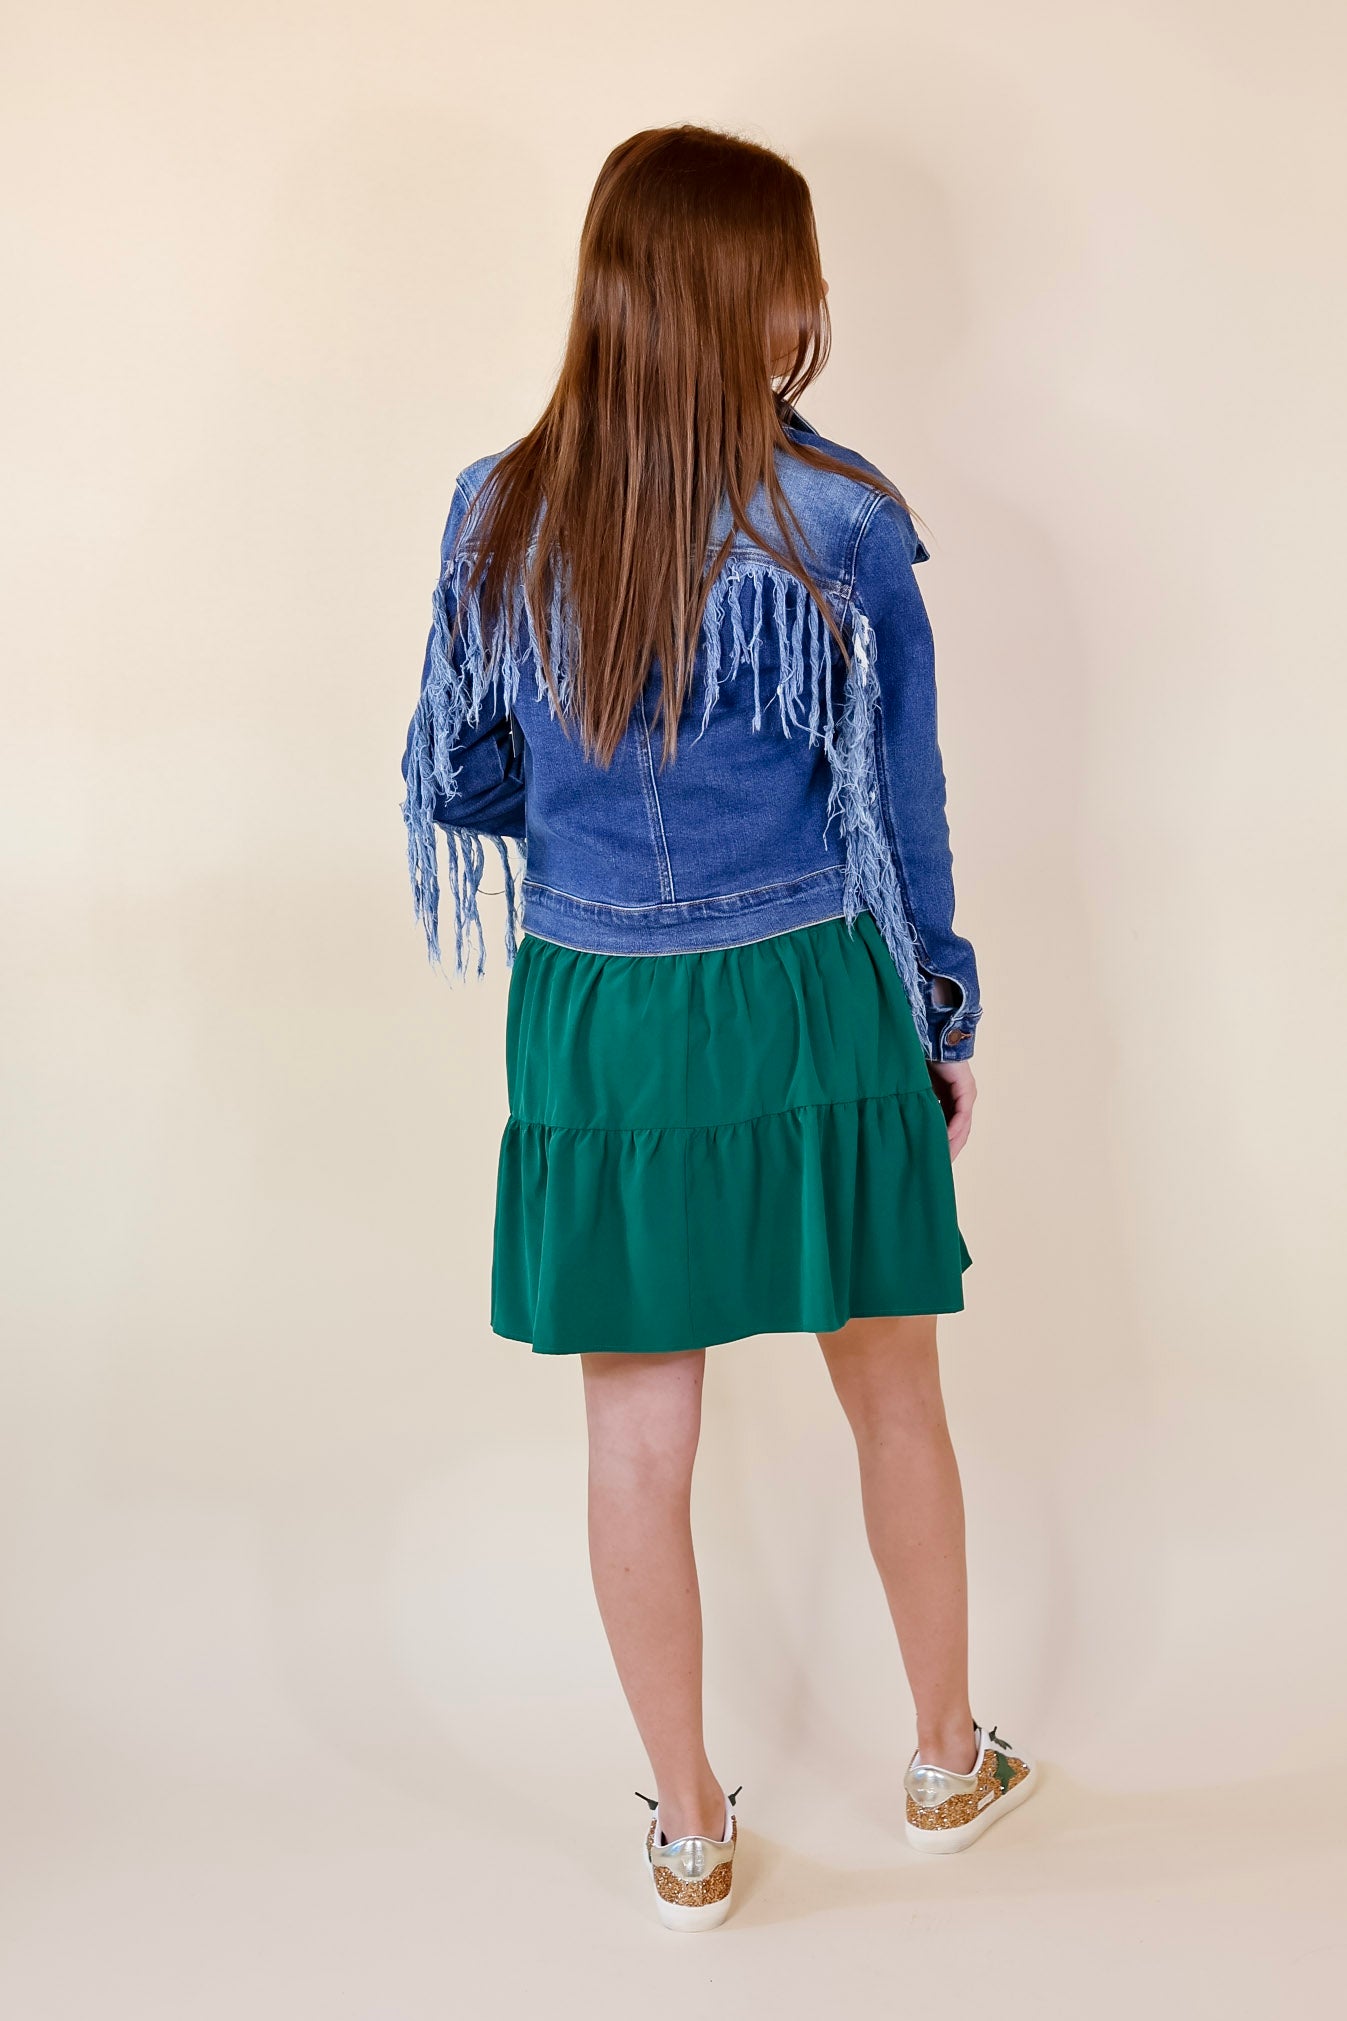 Judy Blue | At The Top Frayed Denim Fringe Jacket in Medium Wash - Giddy Up Glamour Boutique